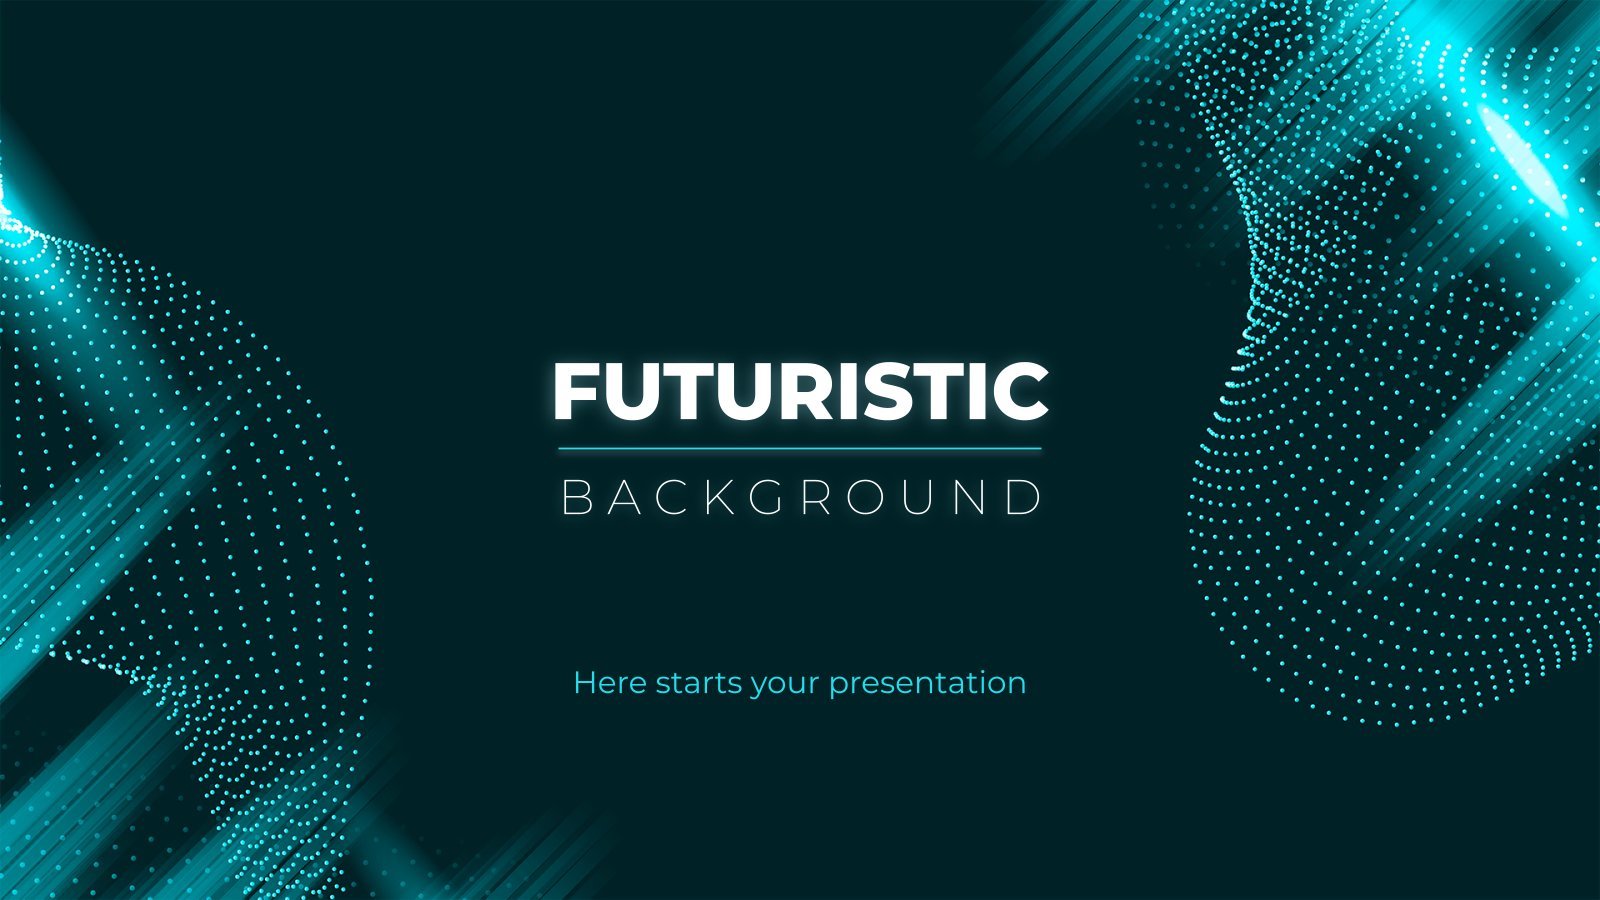 Futuristic Background presentation template 